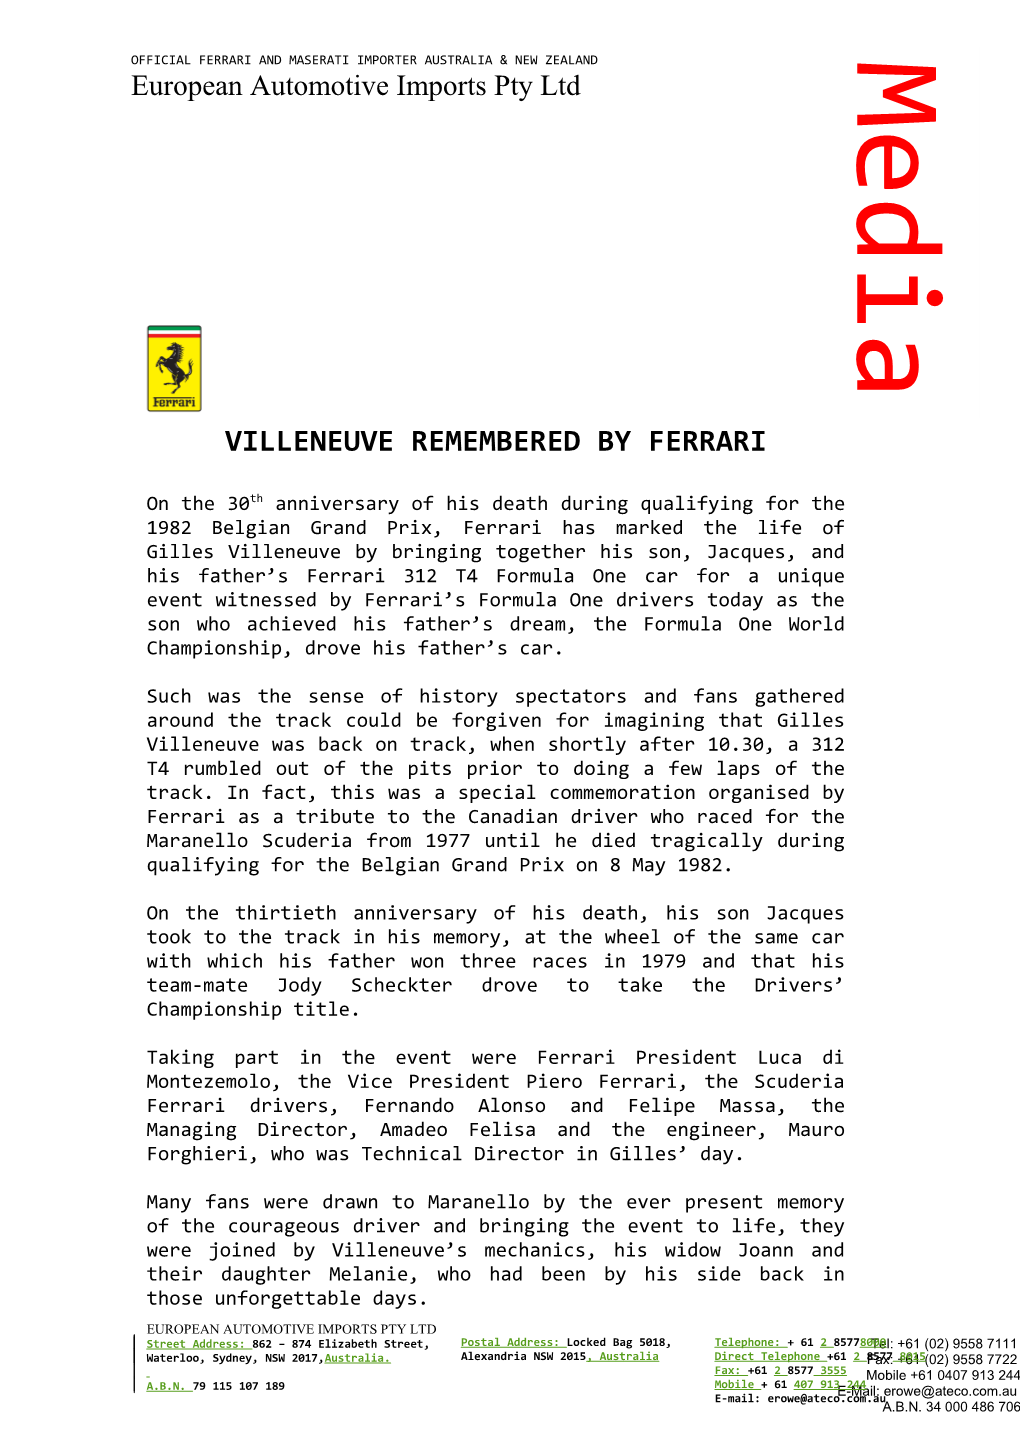 Villeneuve Remembered by Ferrari